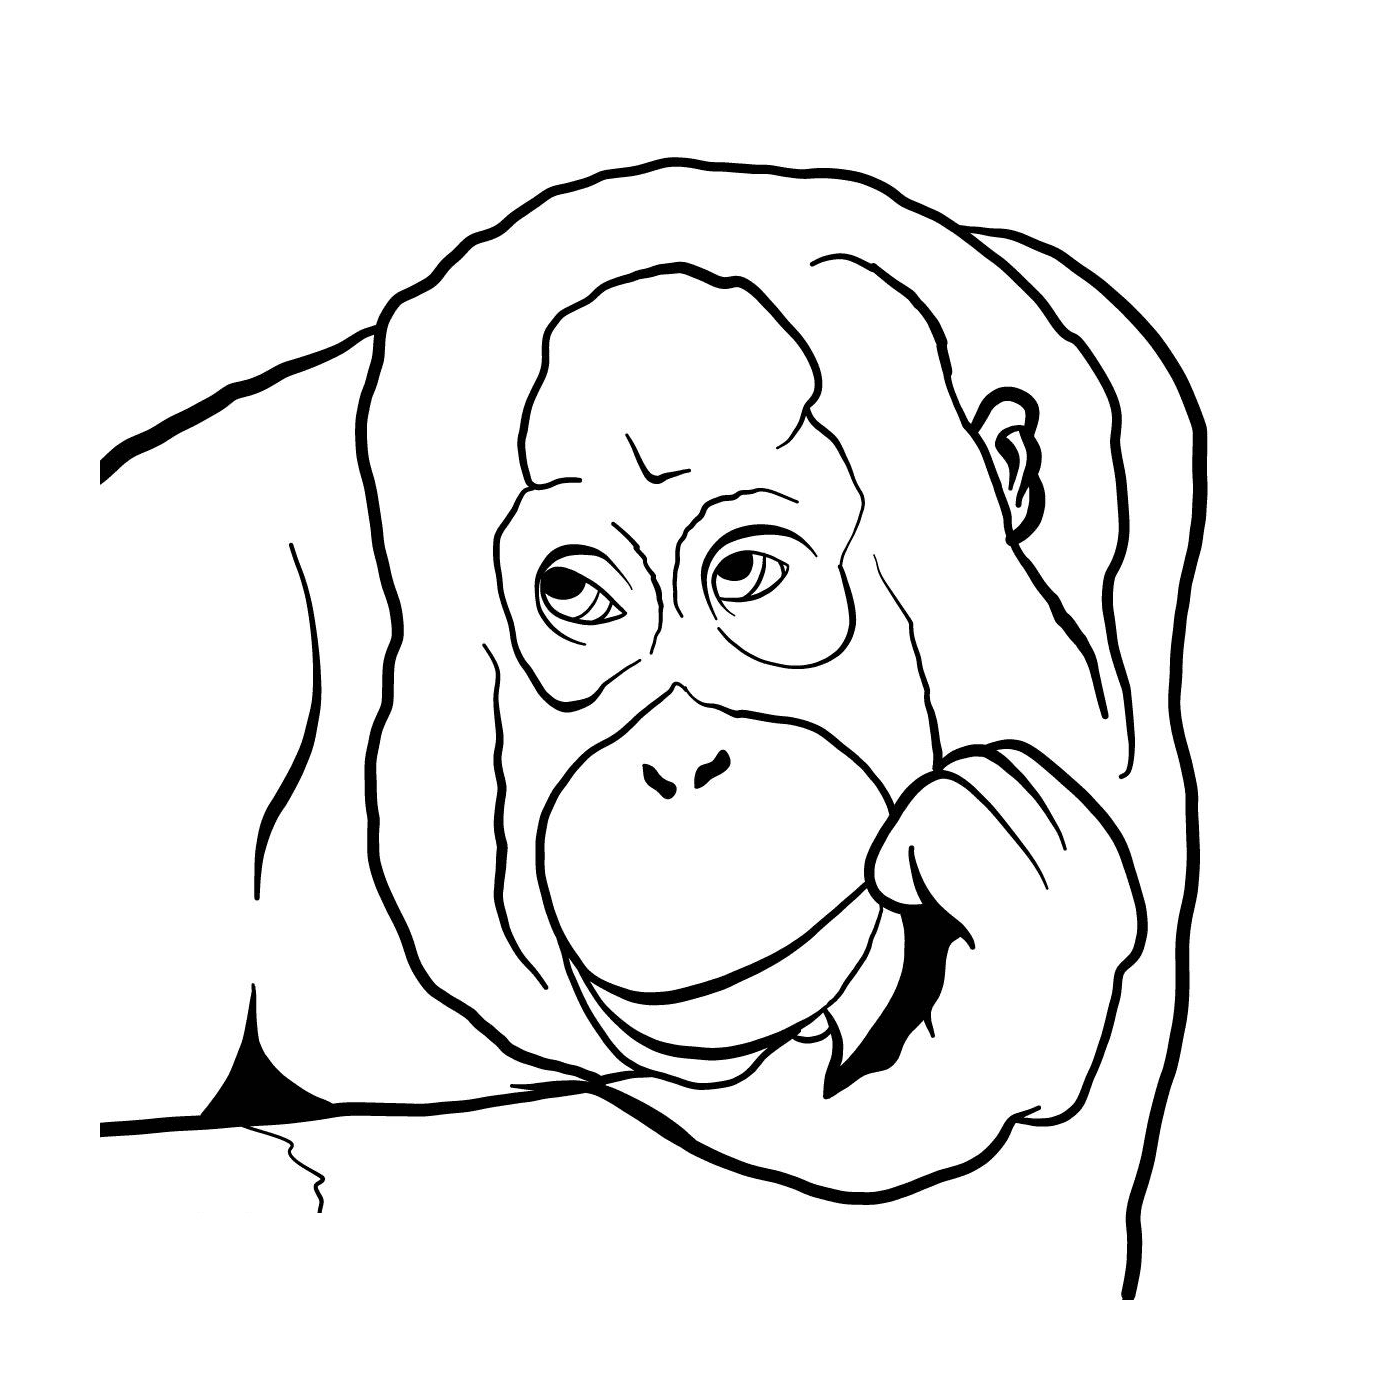  un gorilla 